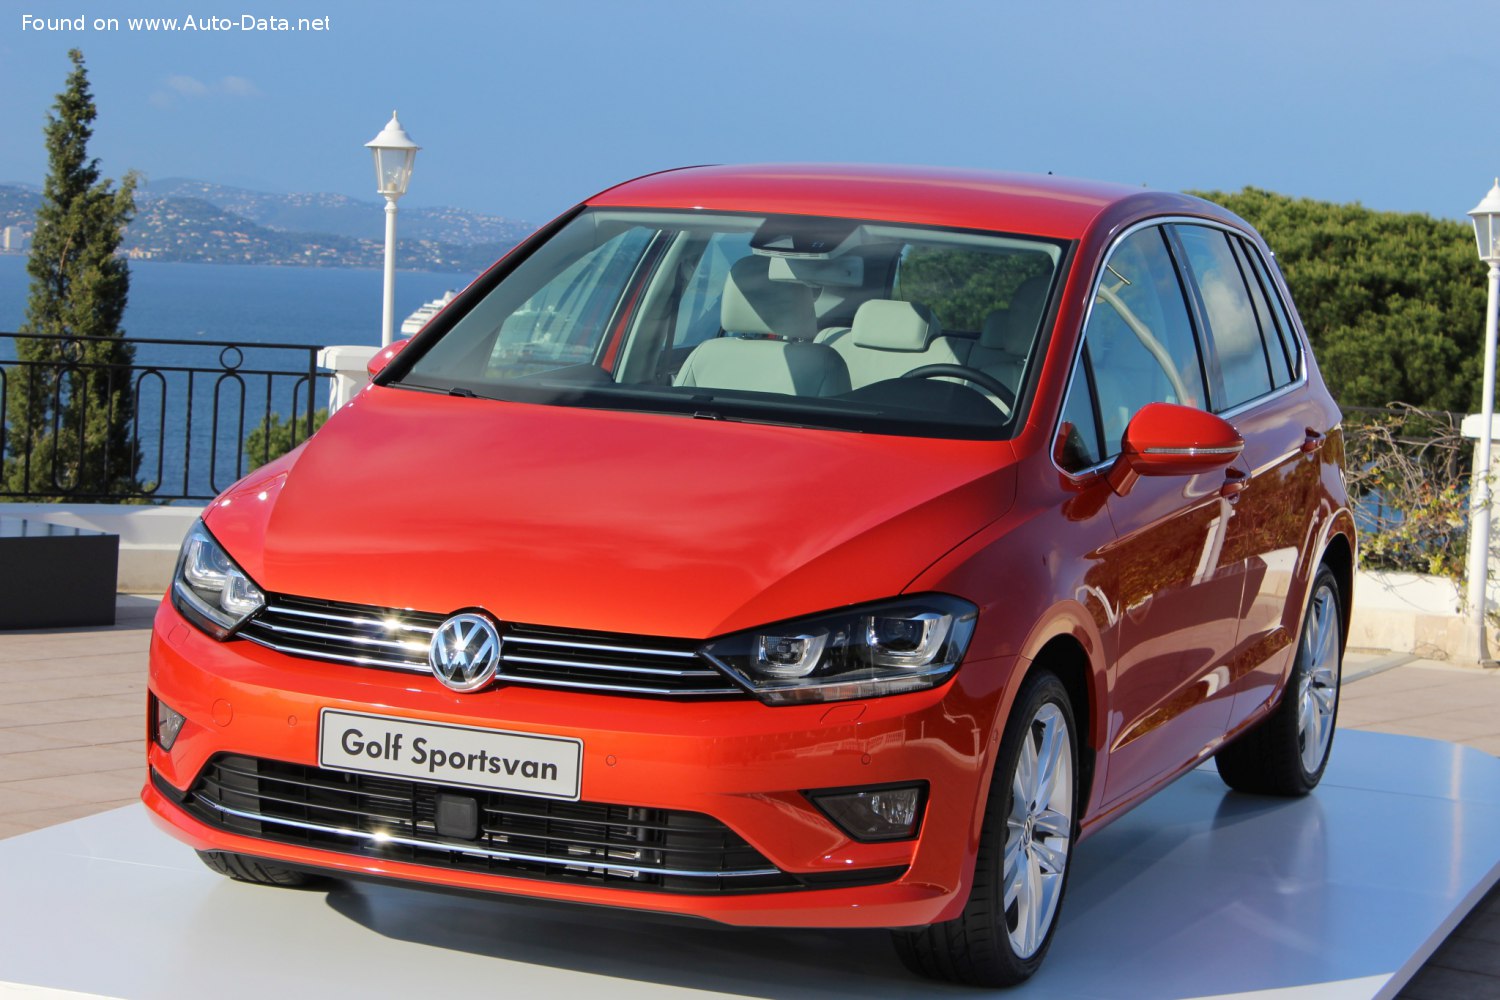 https://www.auto-data.net/images/f113/Volkswagen-Golf-VII-Sportsvan.jpg